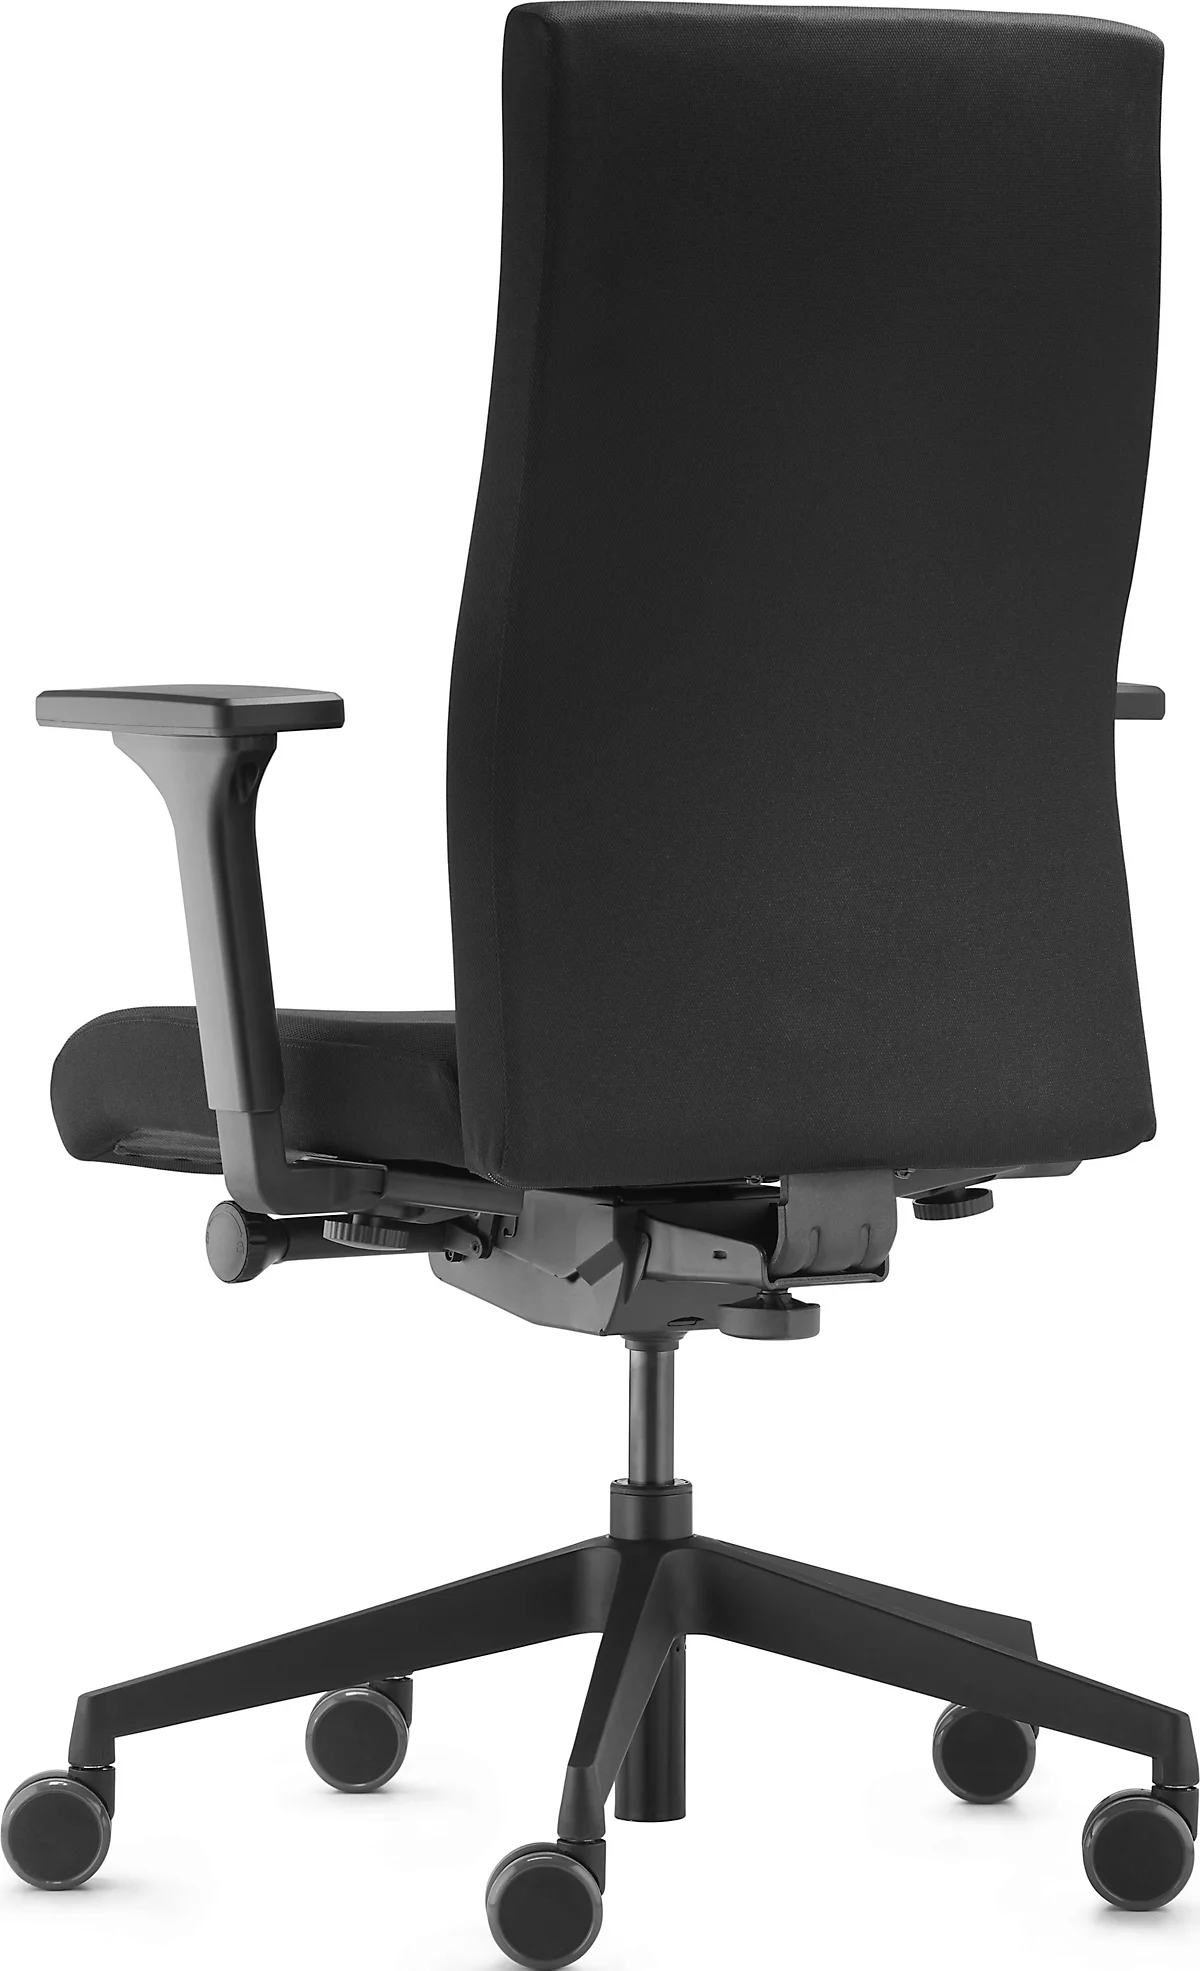 Silla de oficina Dauphin to-strike work comfort pro, con reposabrazos, mecanismo sincronizado, asiento contorneado, negro